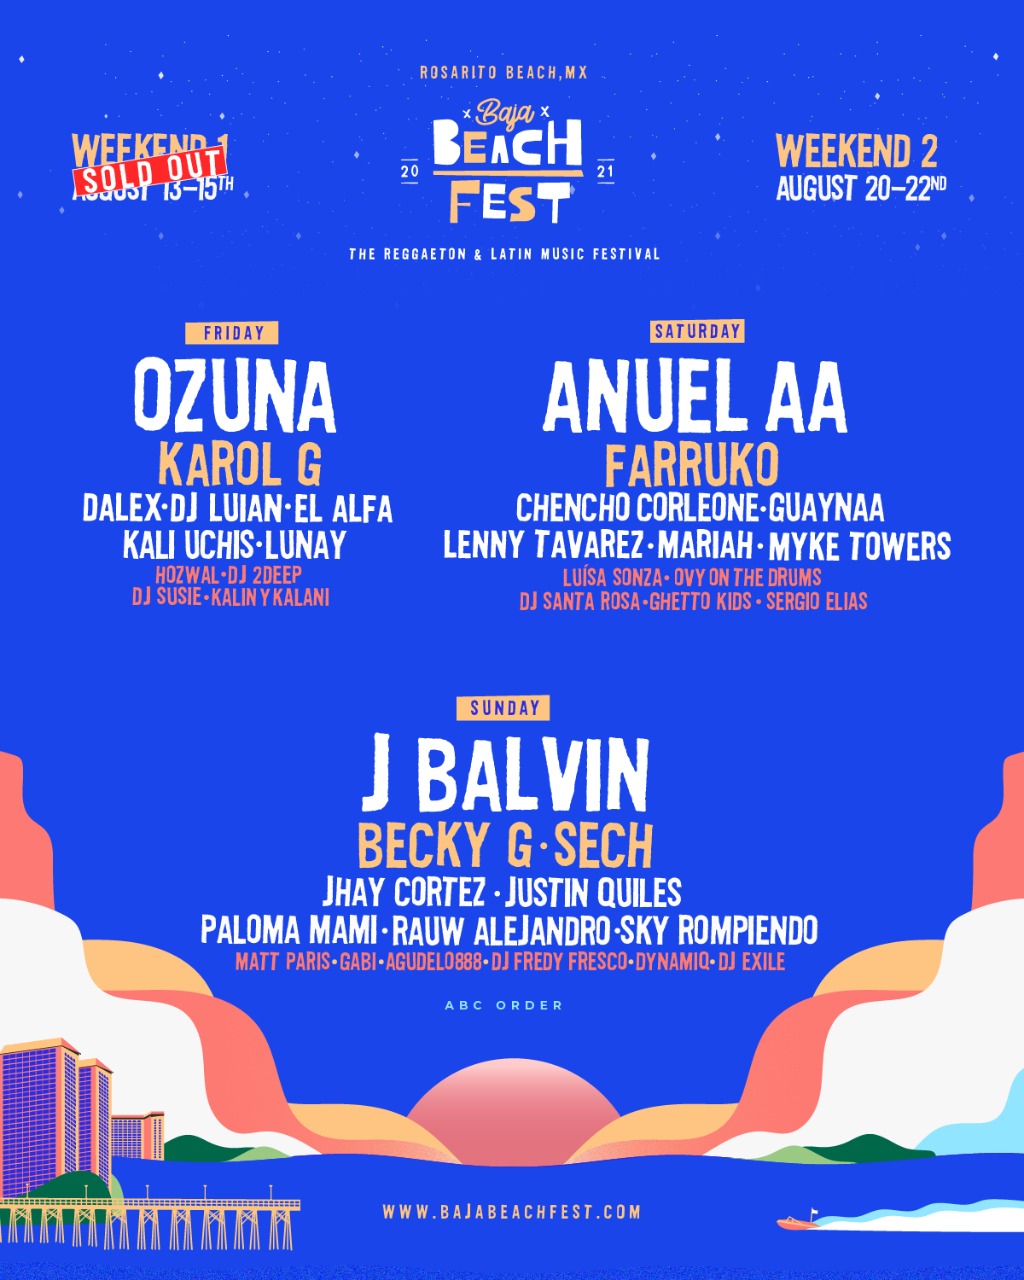 Baja Beach Fest 2021 Announces Second Weekend, Occurring August 20th